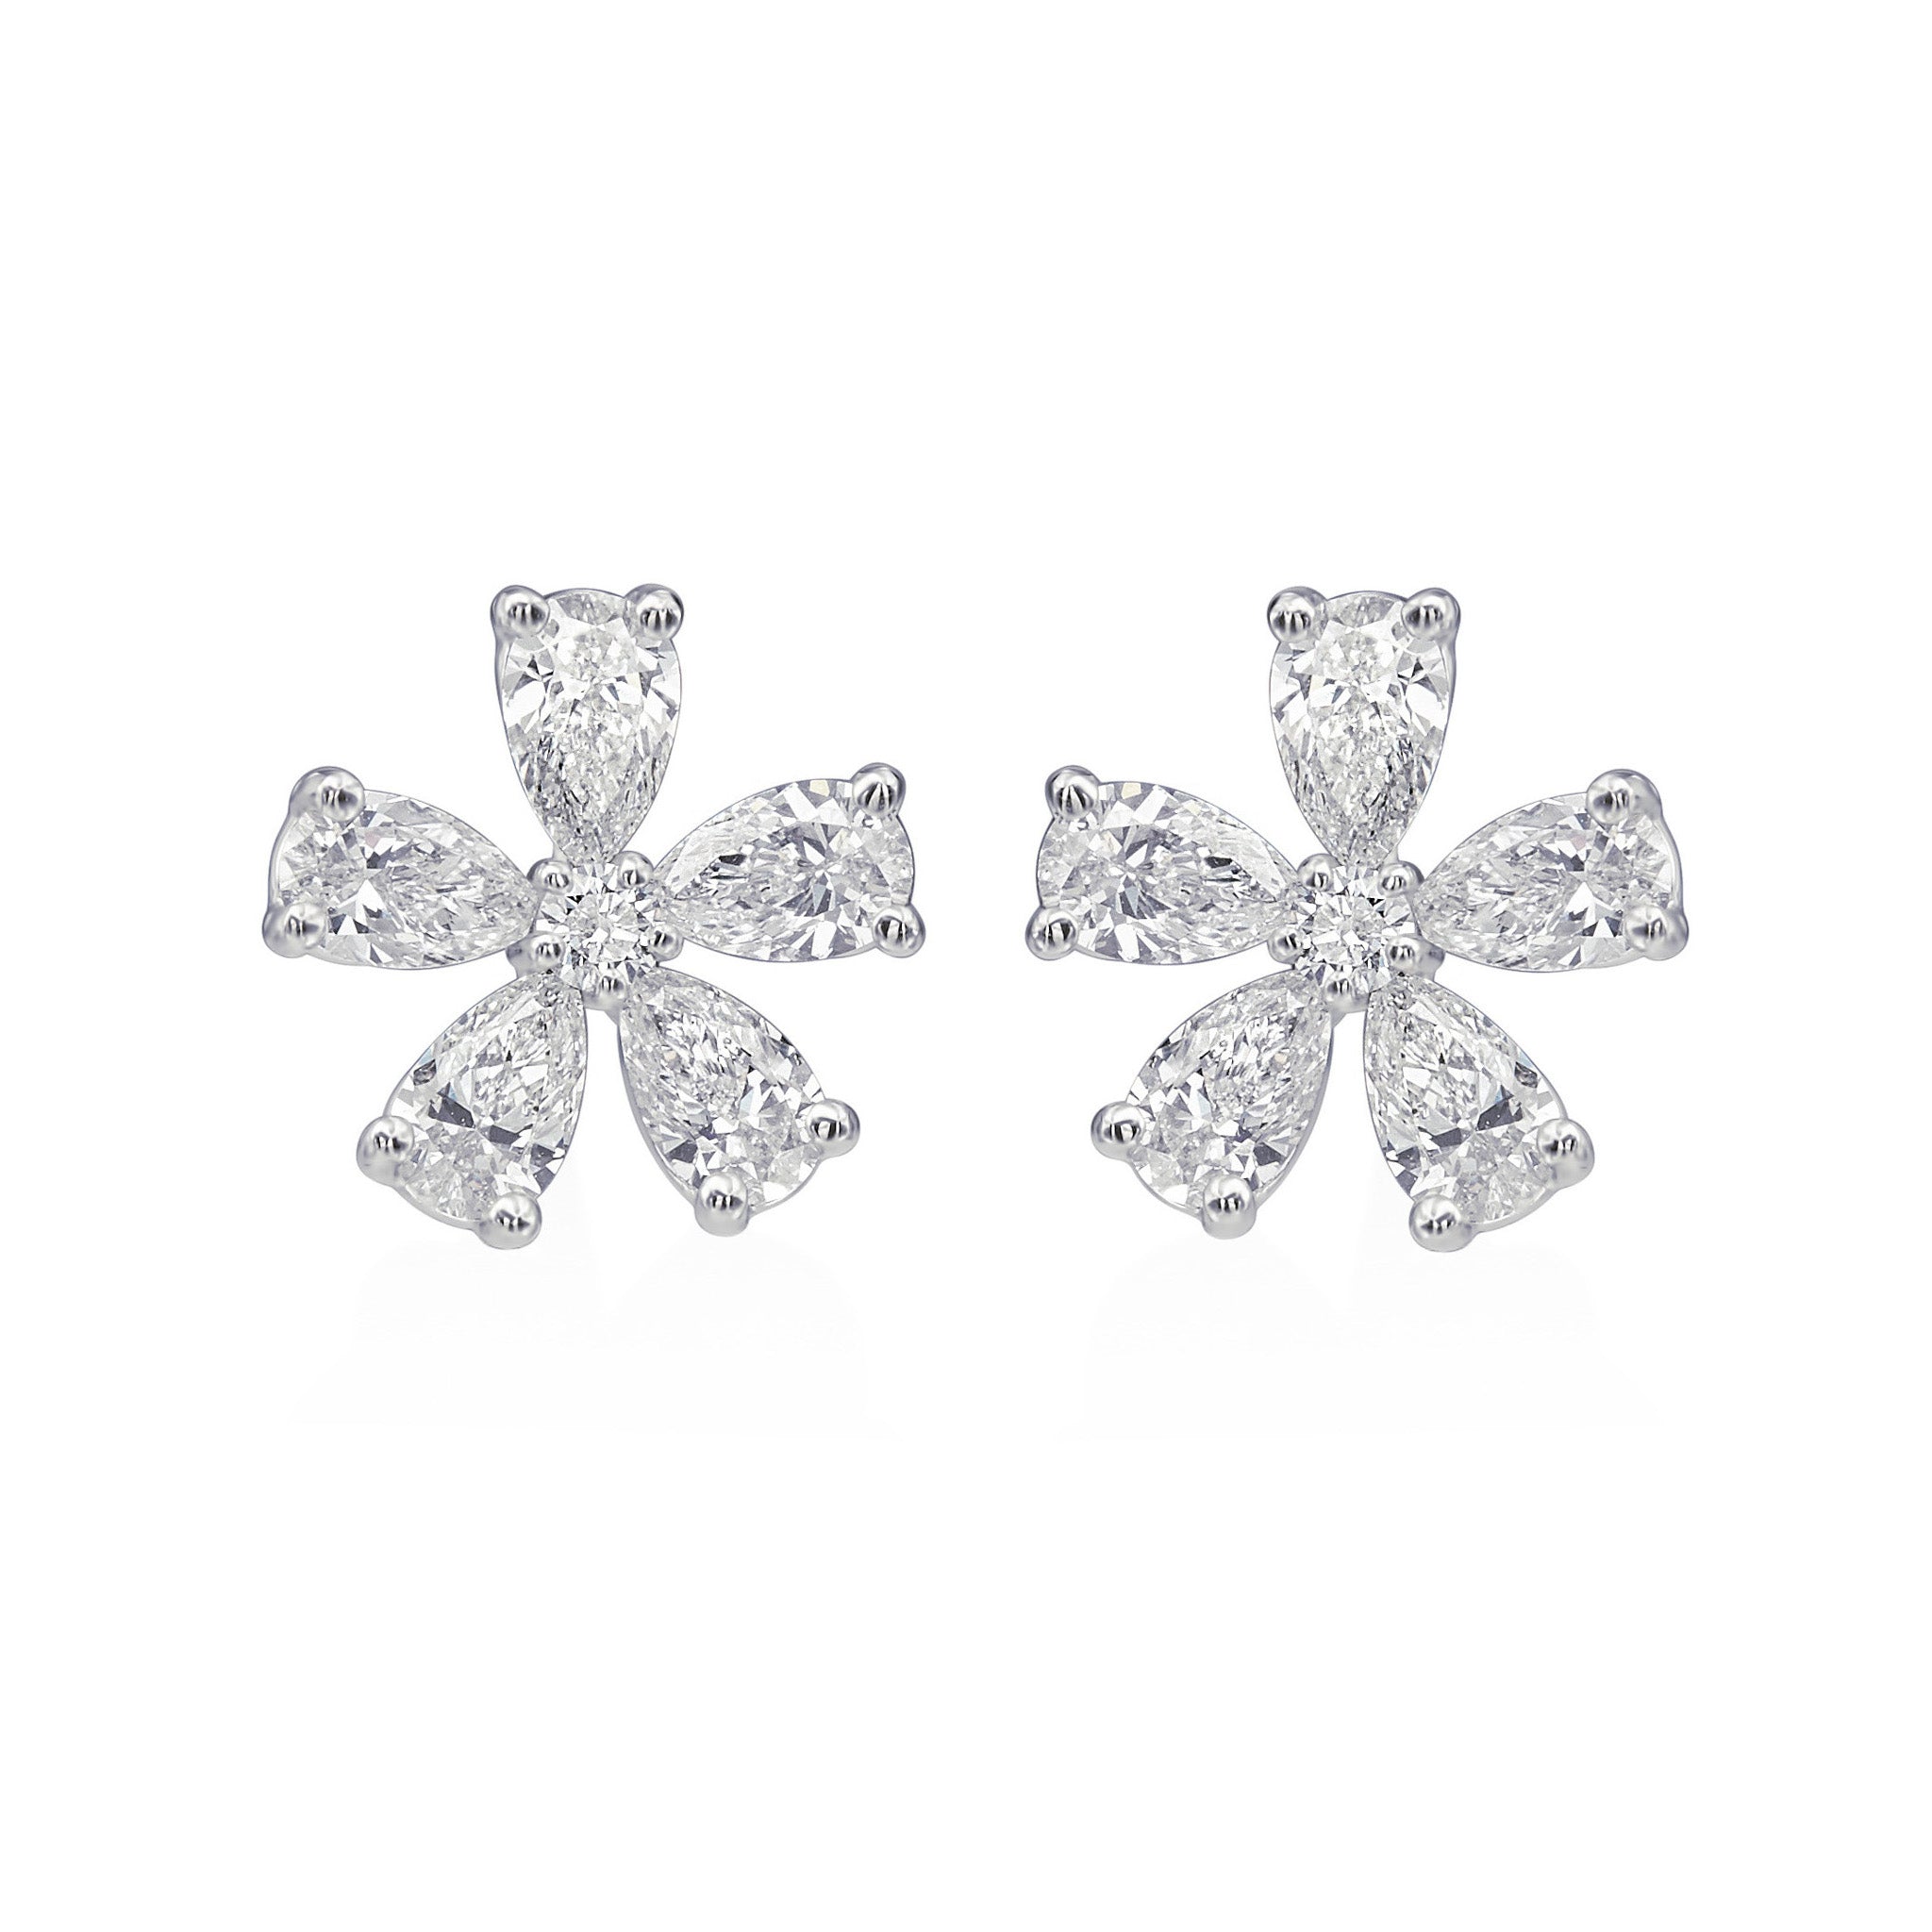 Pear Shaped Diamond Cluster Earrings in Platinum